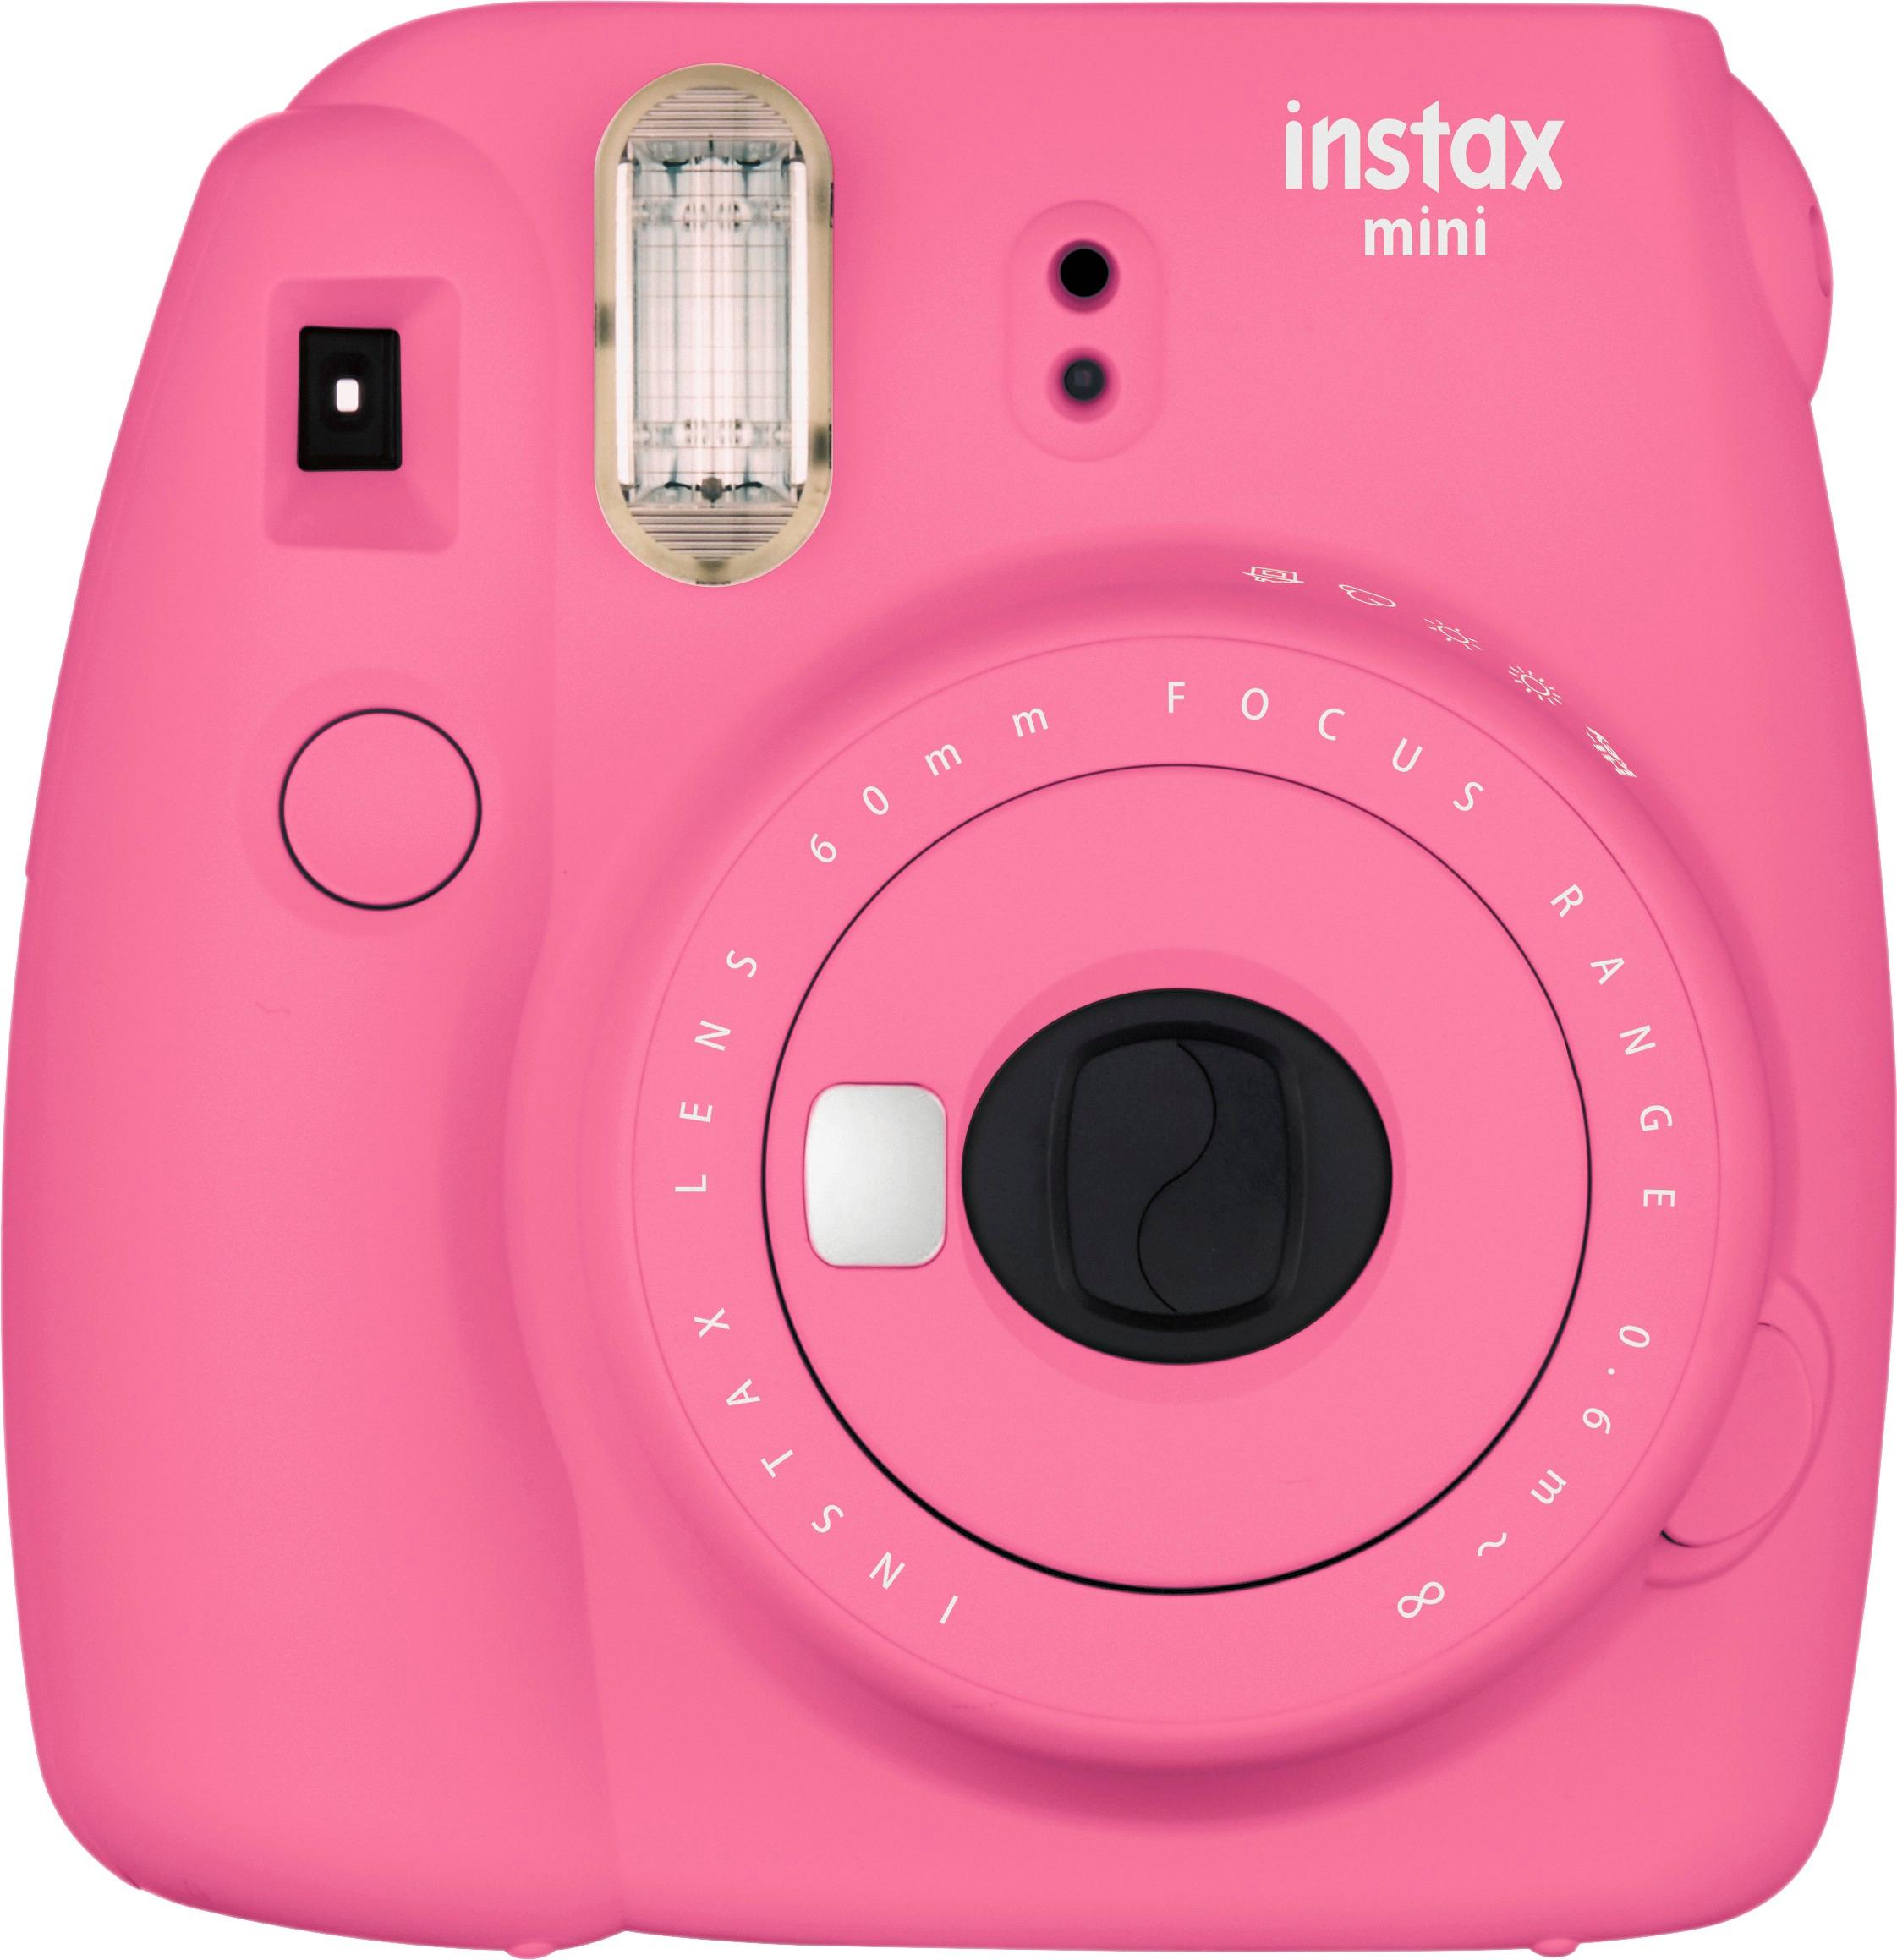 Fractie Frank dorp Best Buy: Fujifilm instax mini 9 Instant Film Camera Flamingo Pink 16550631